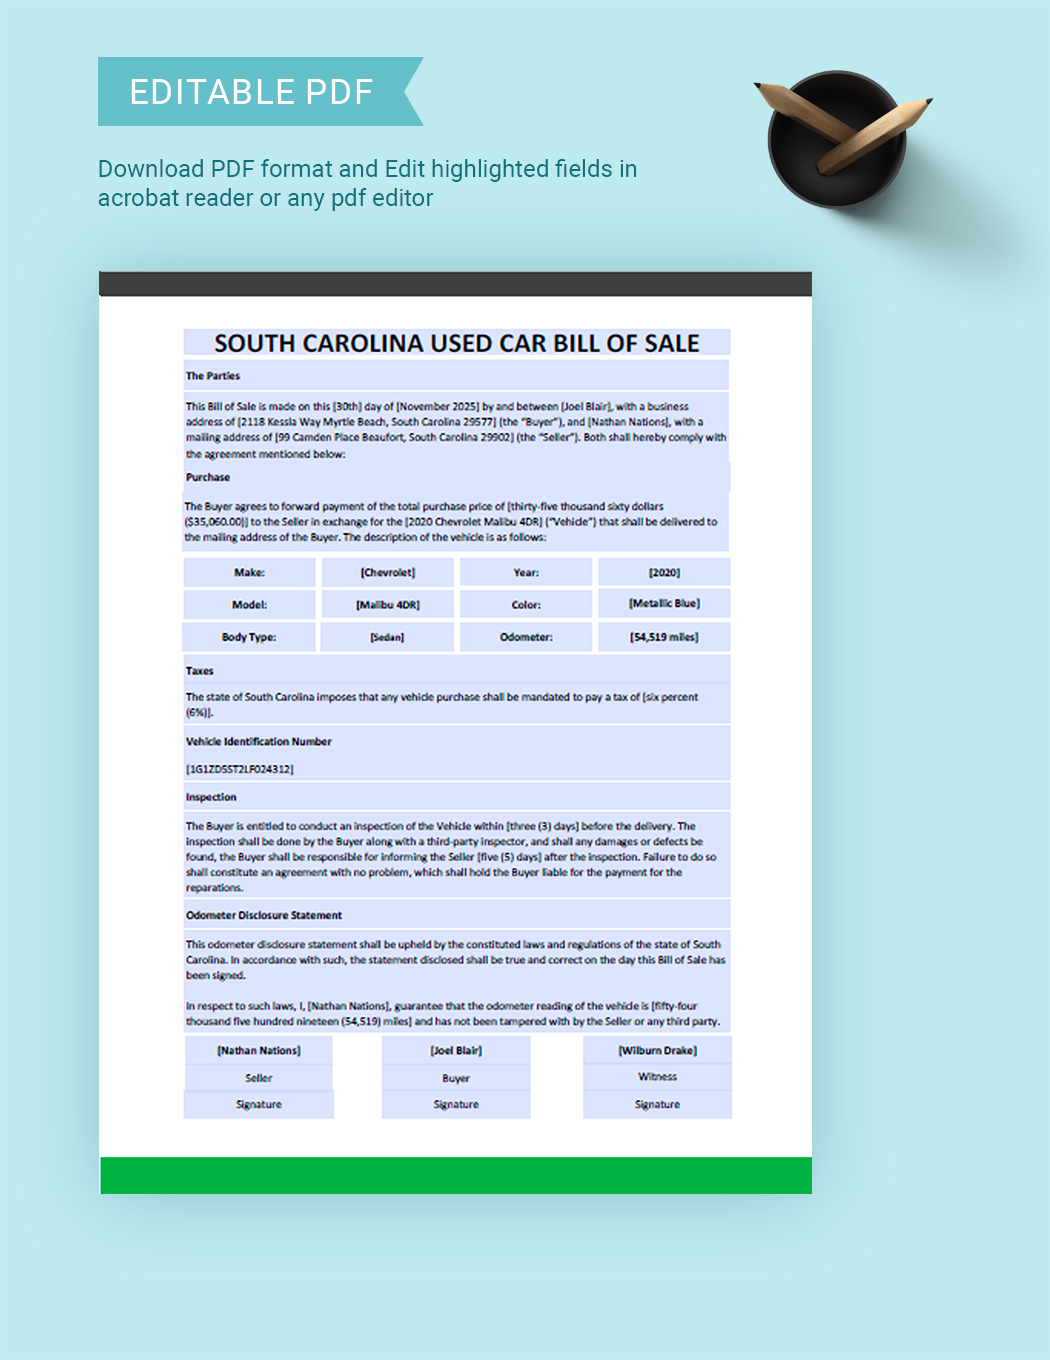 South Carolina Used Car Bill of Sale Template